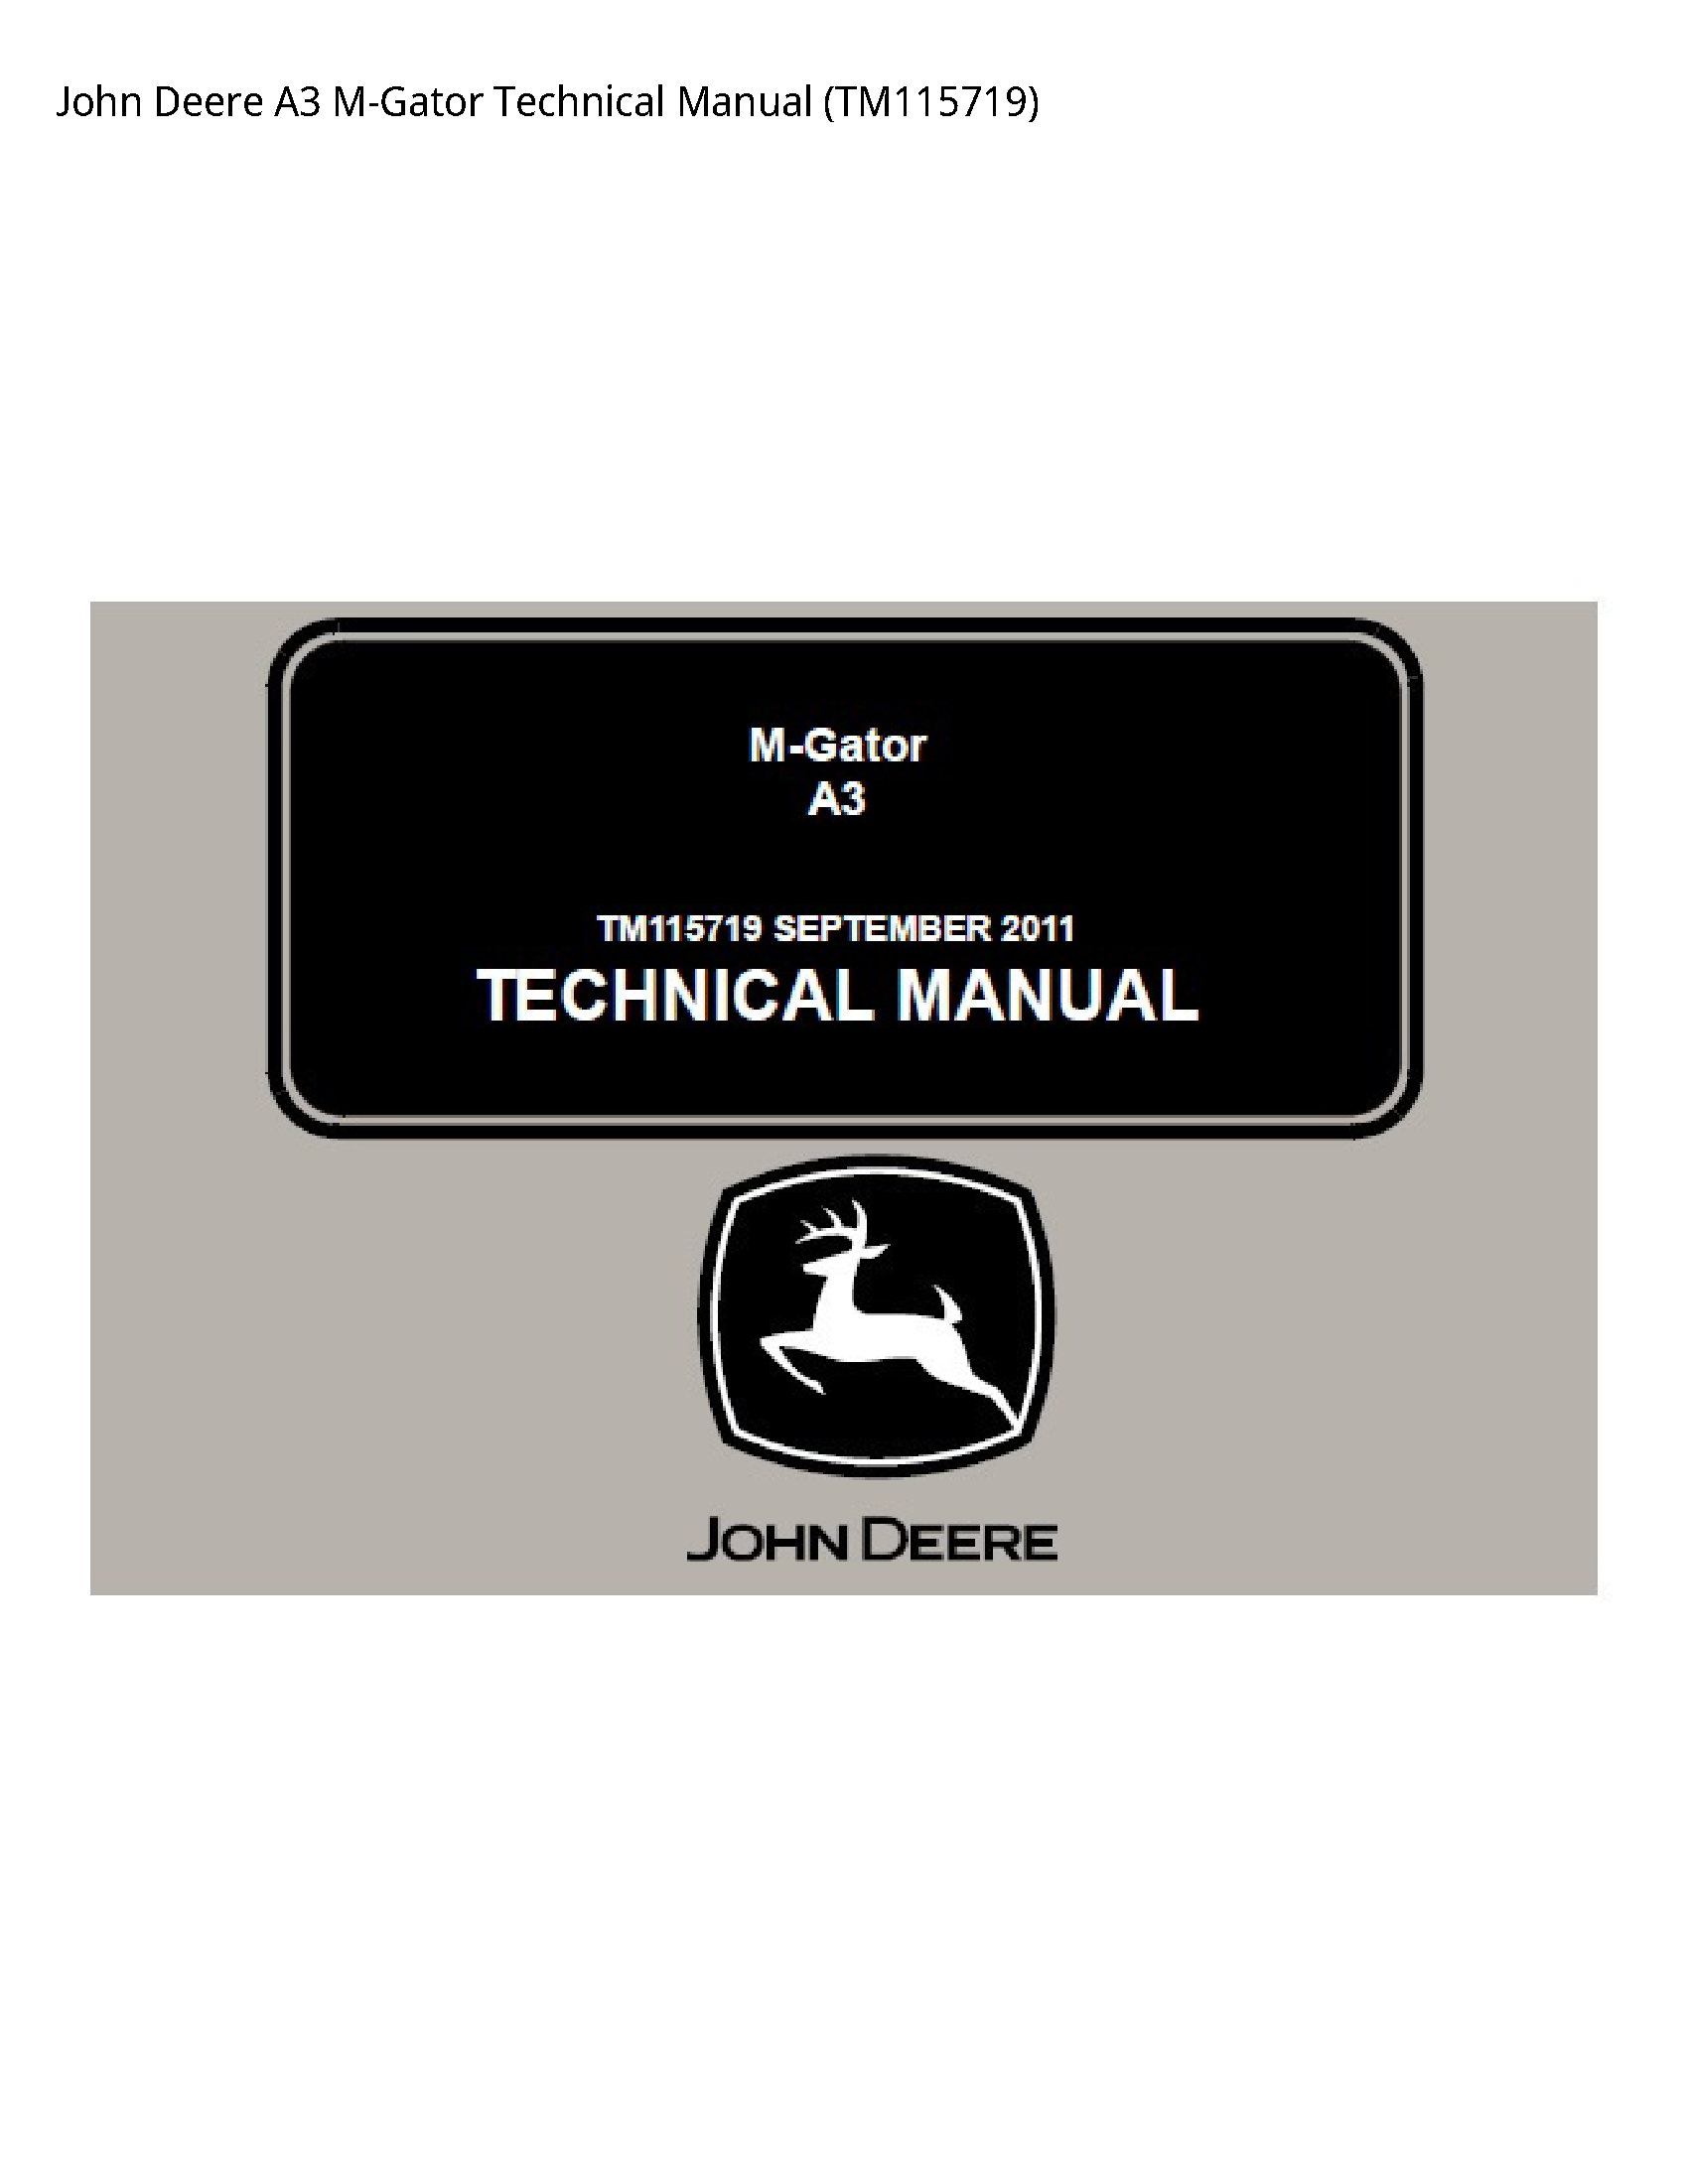 John Deere A3 M-Gator Technical manual